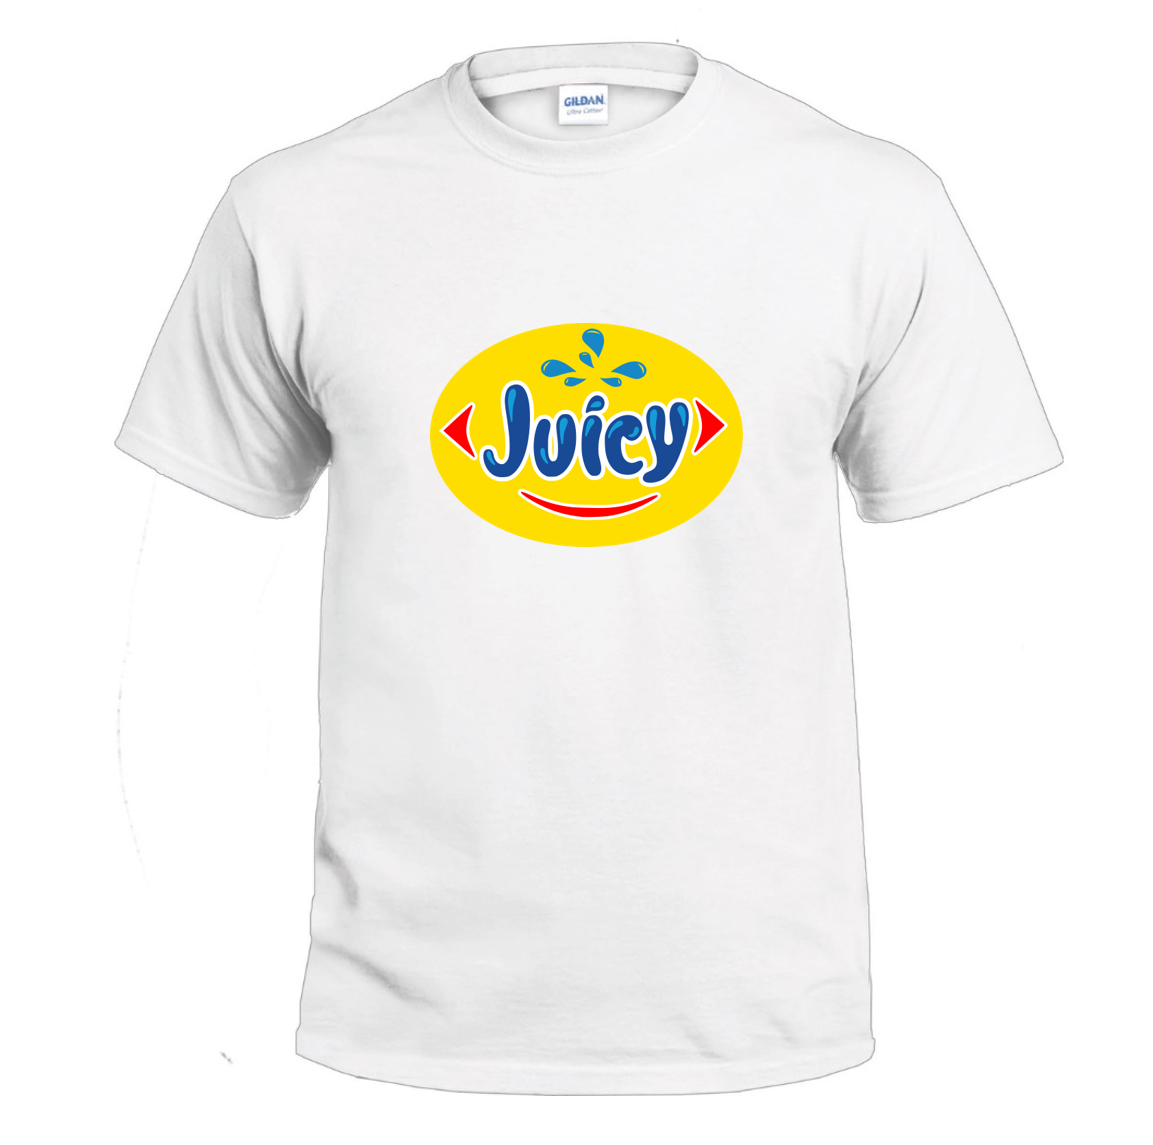 Juicy t-shirt